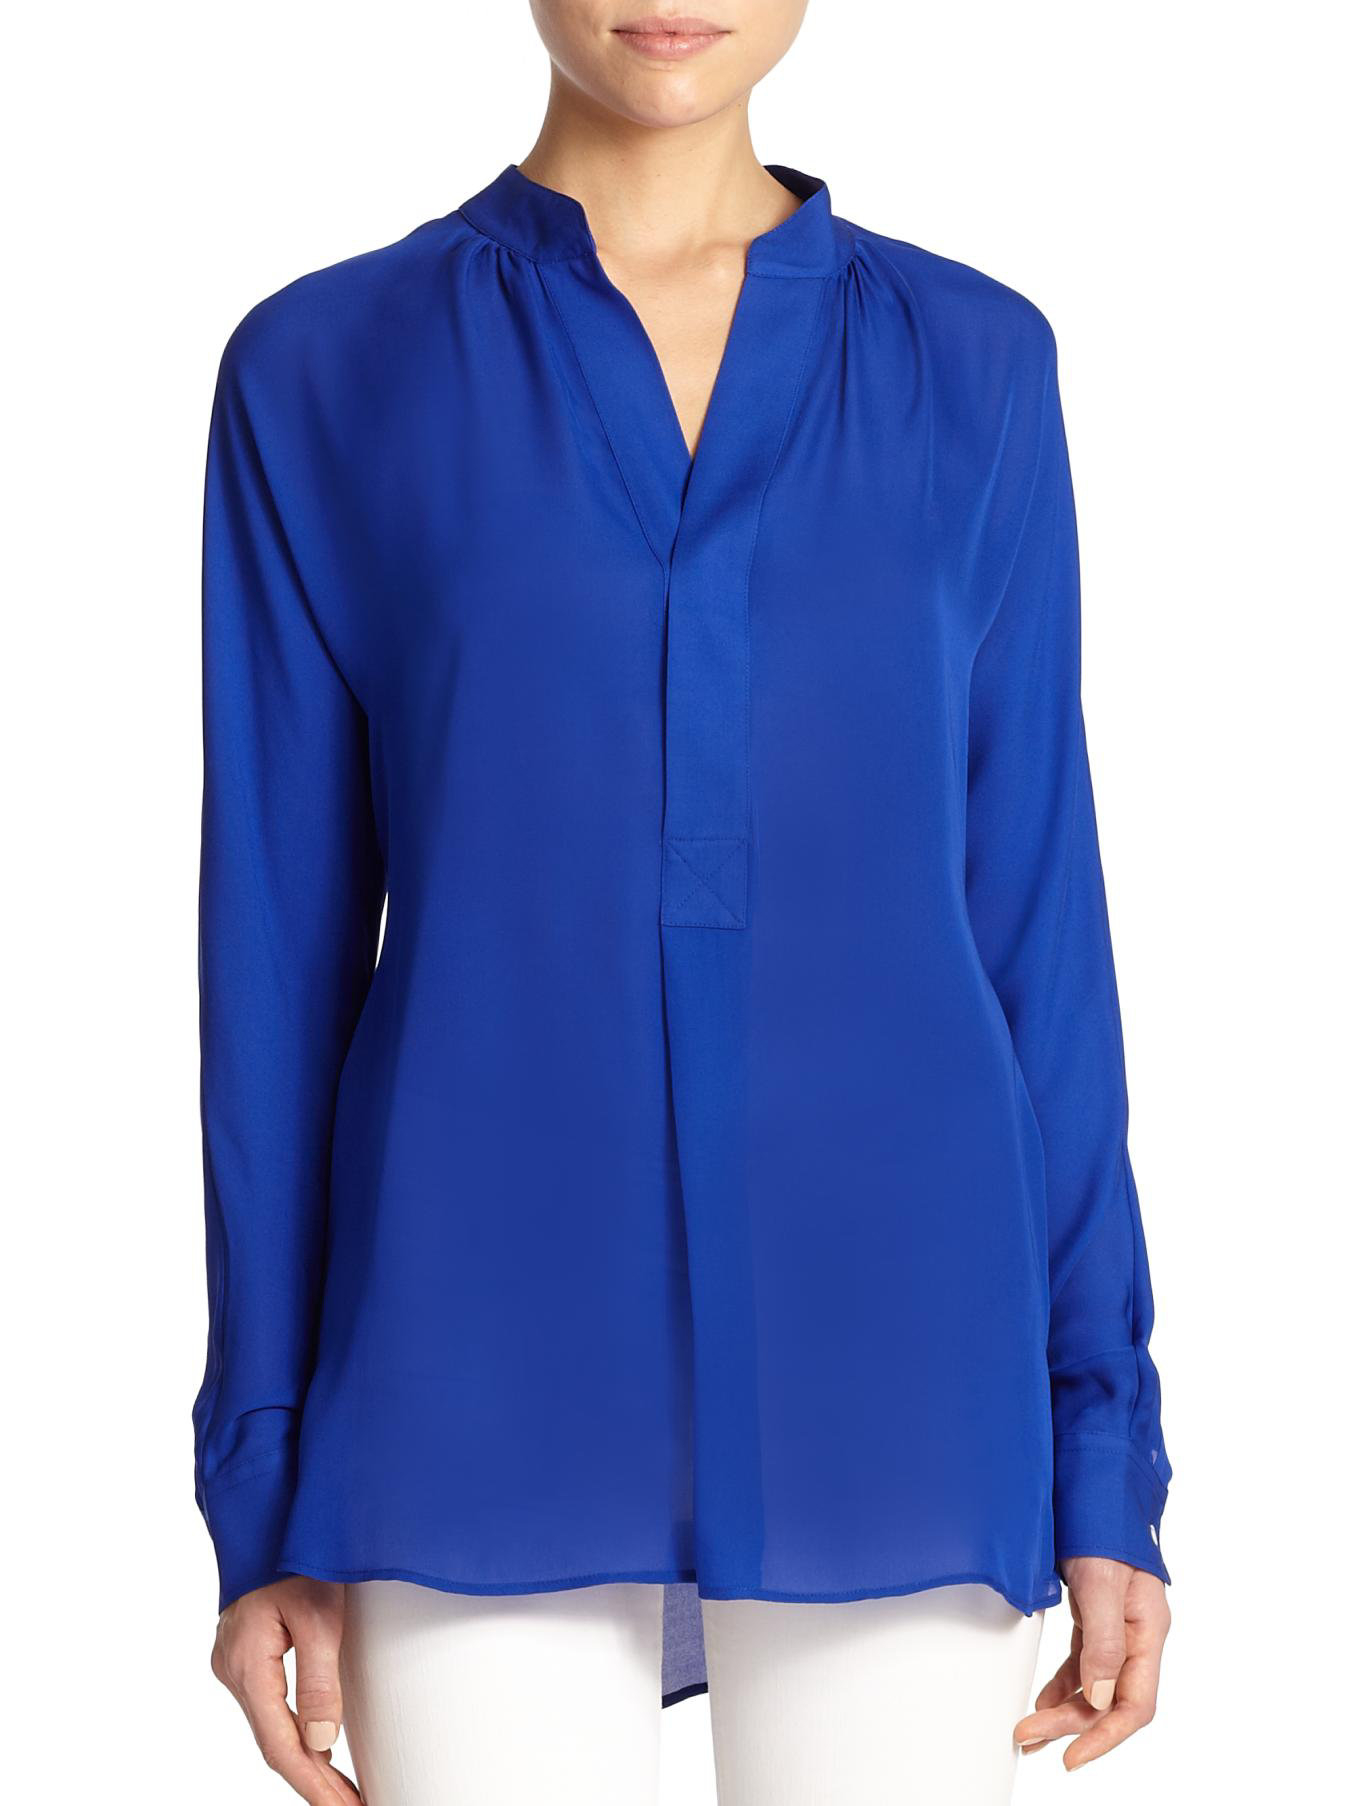 Lyst - Polo Ralph Lauren Silk Blouse in Blue